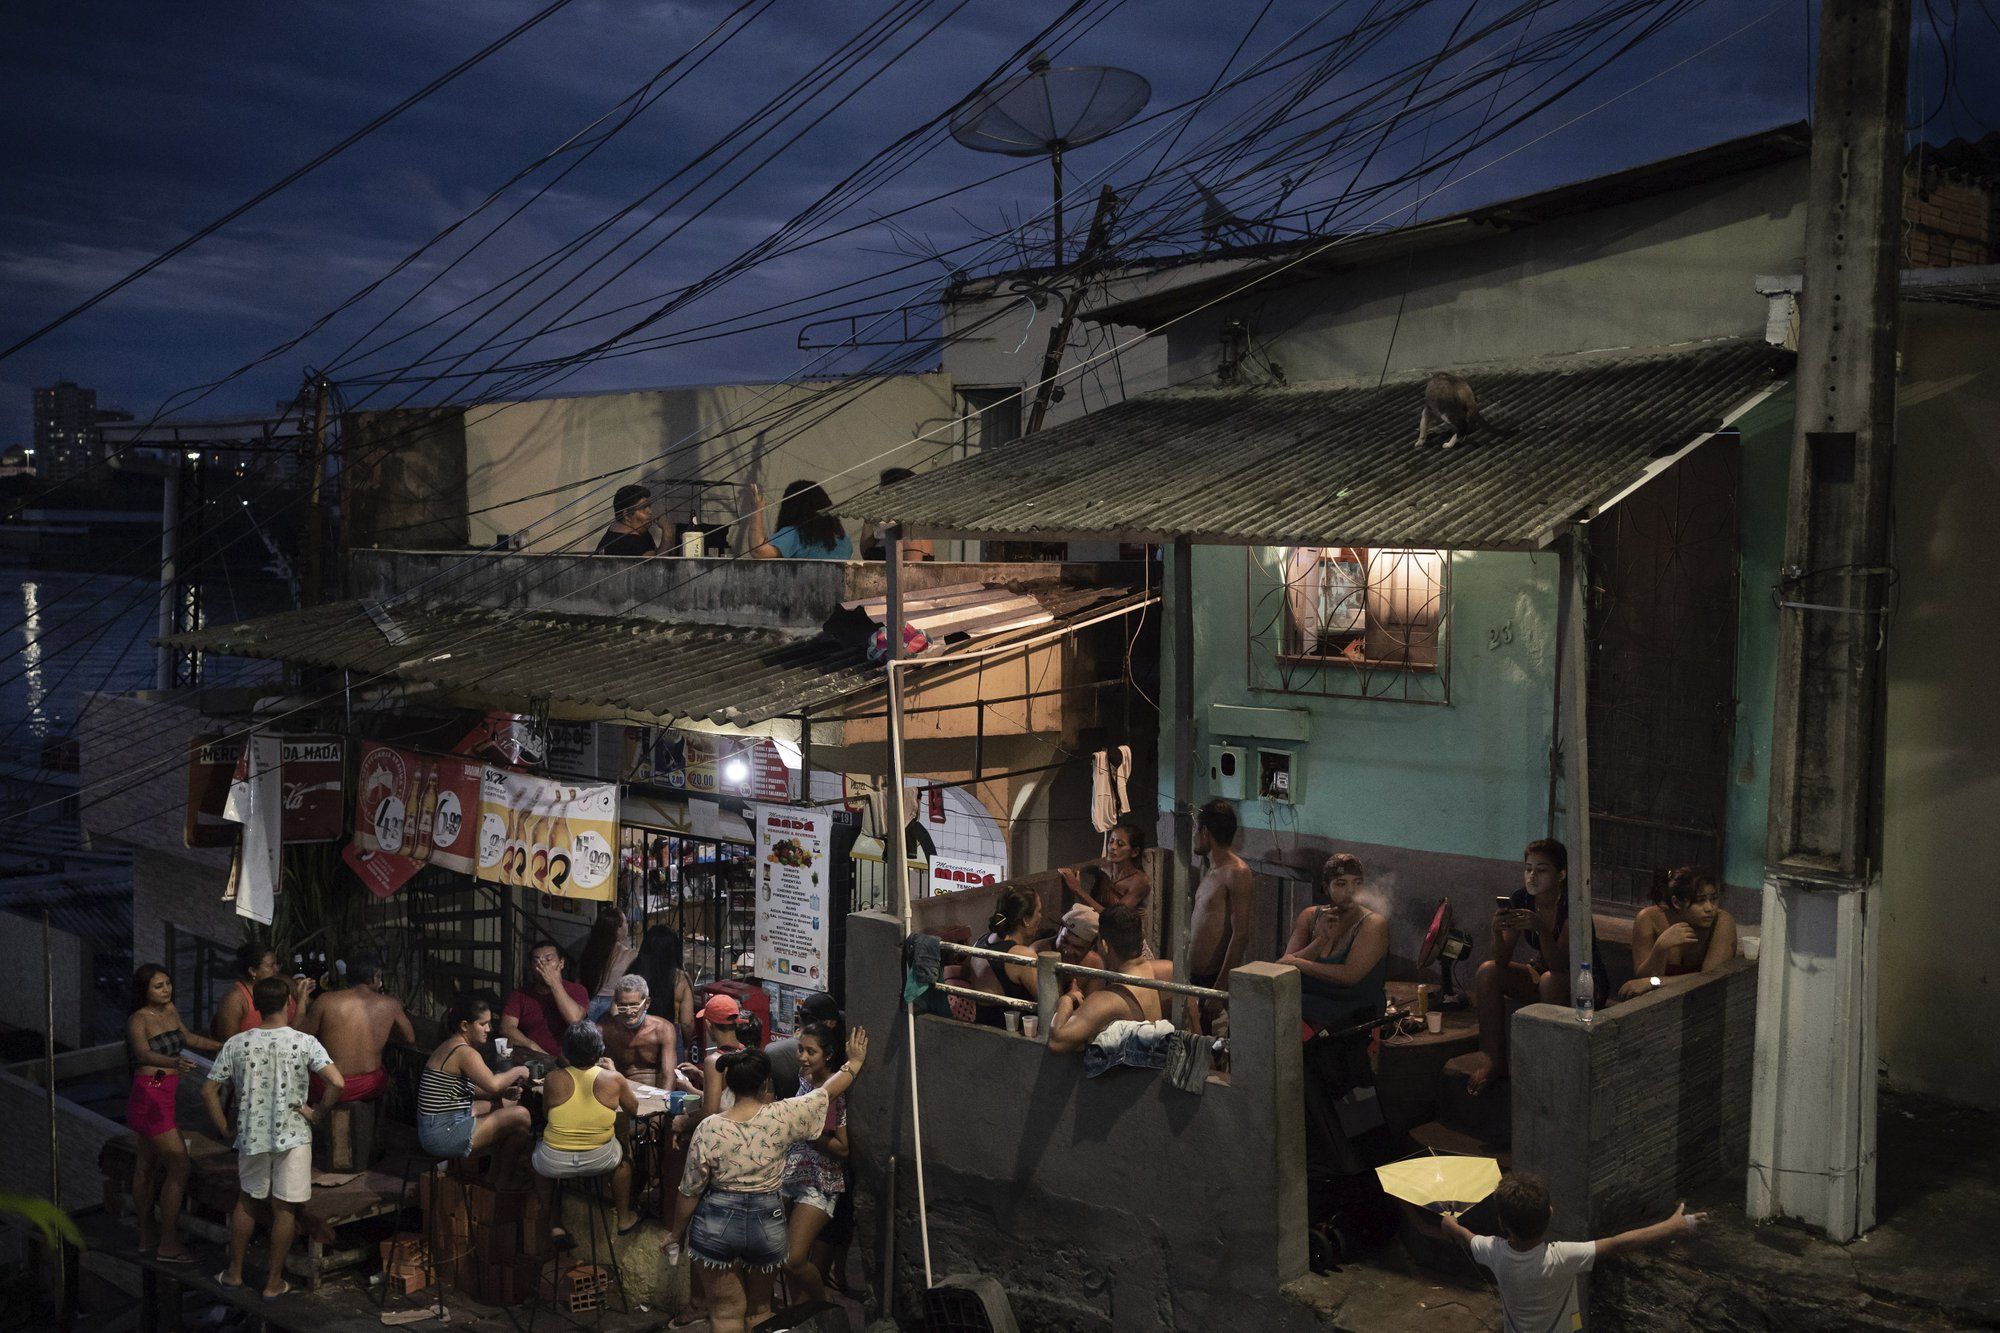 People gather outside a bar in Manaus, Brazil, Sunday, May 24, 2020, amid the new coronavirus pandemic. Image by Felipe Dana / AP Photo. Brazil, 2020.